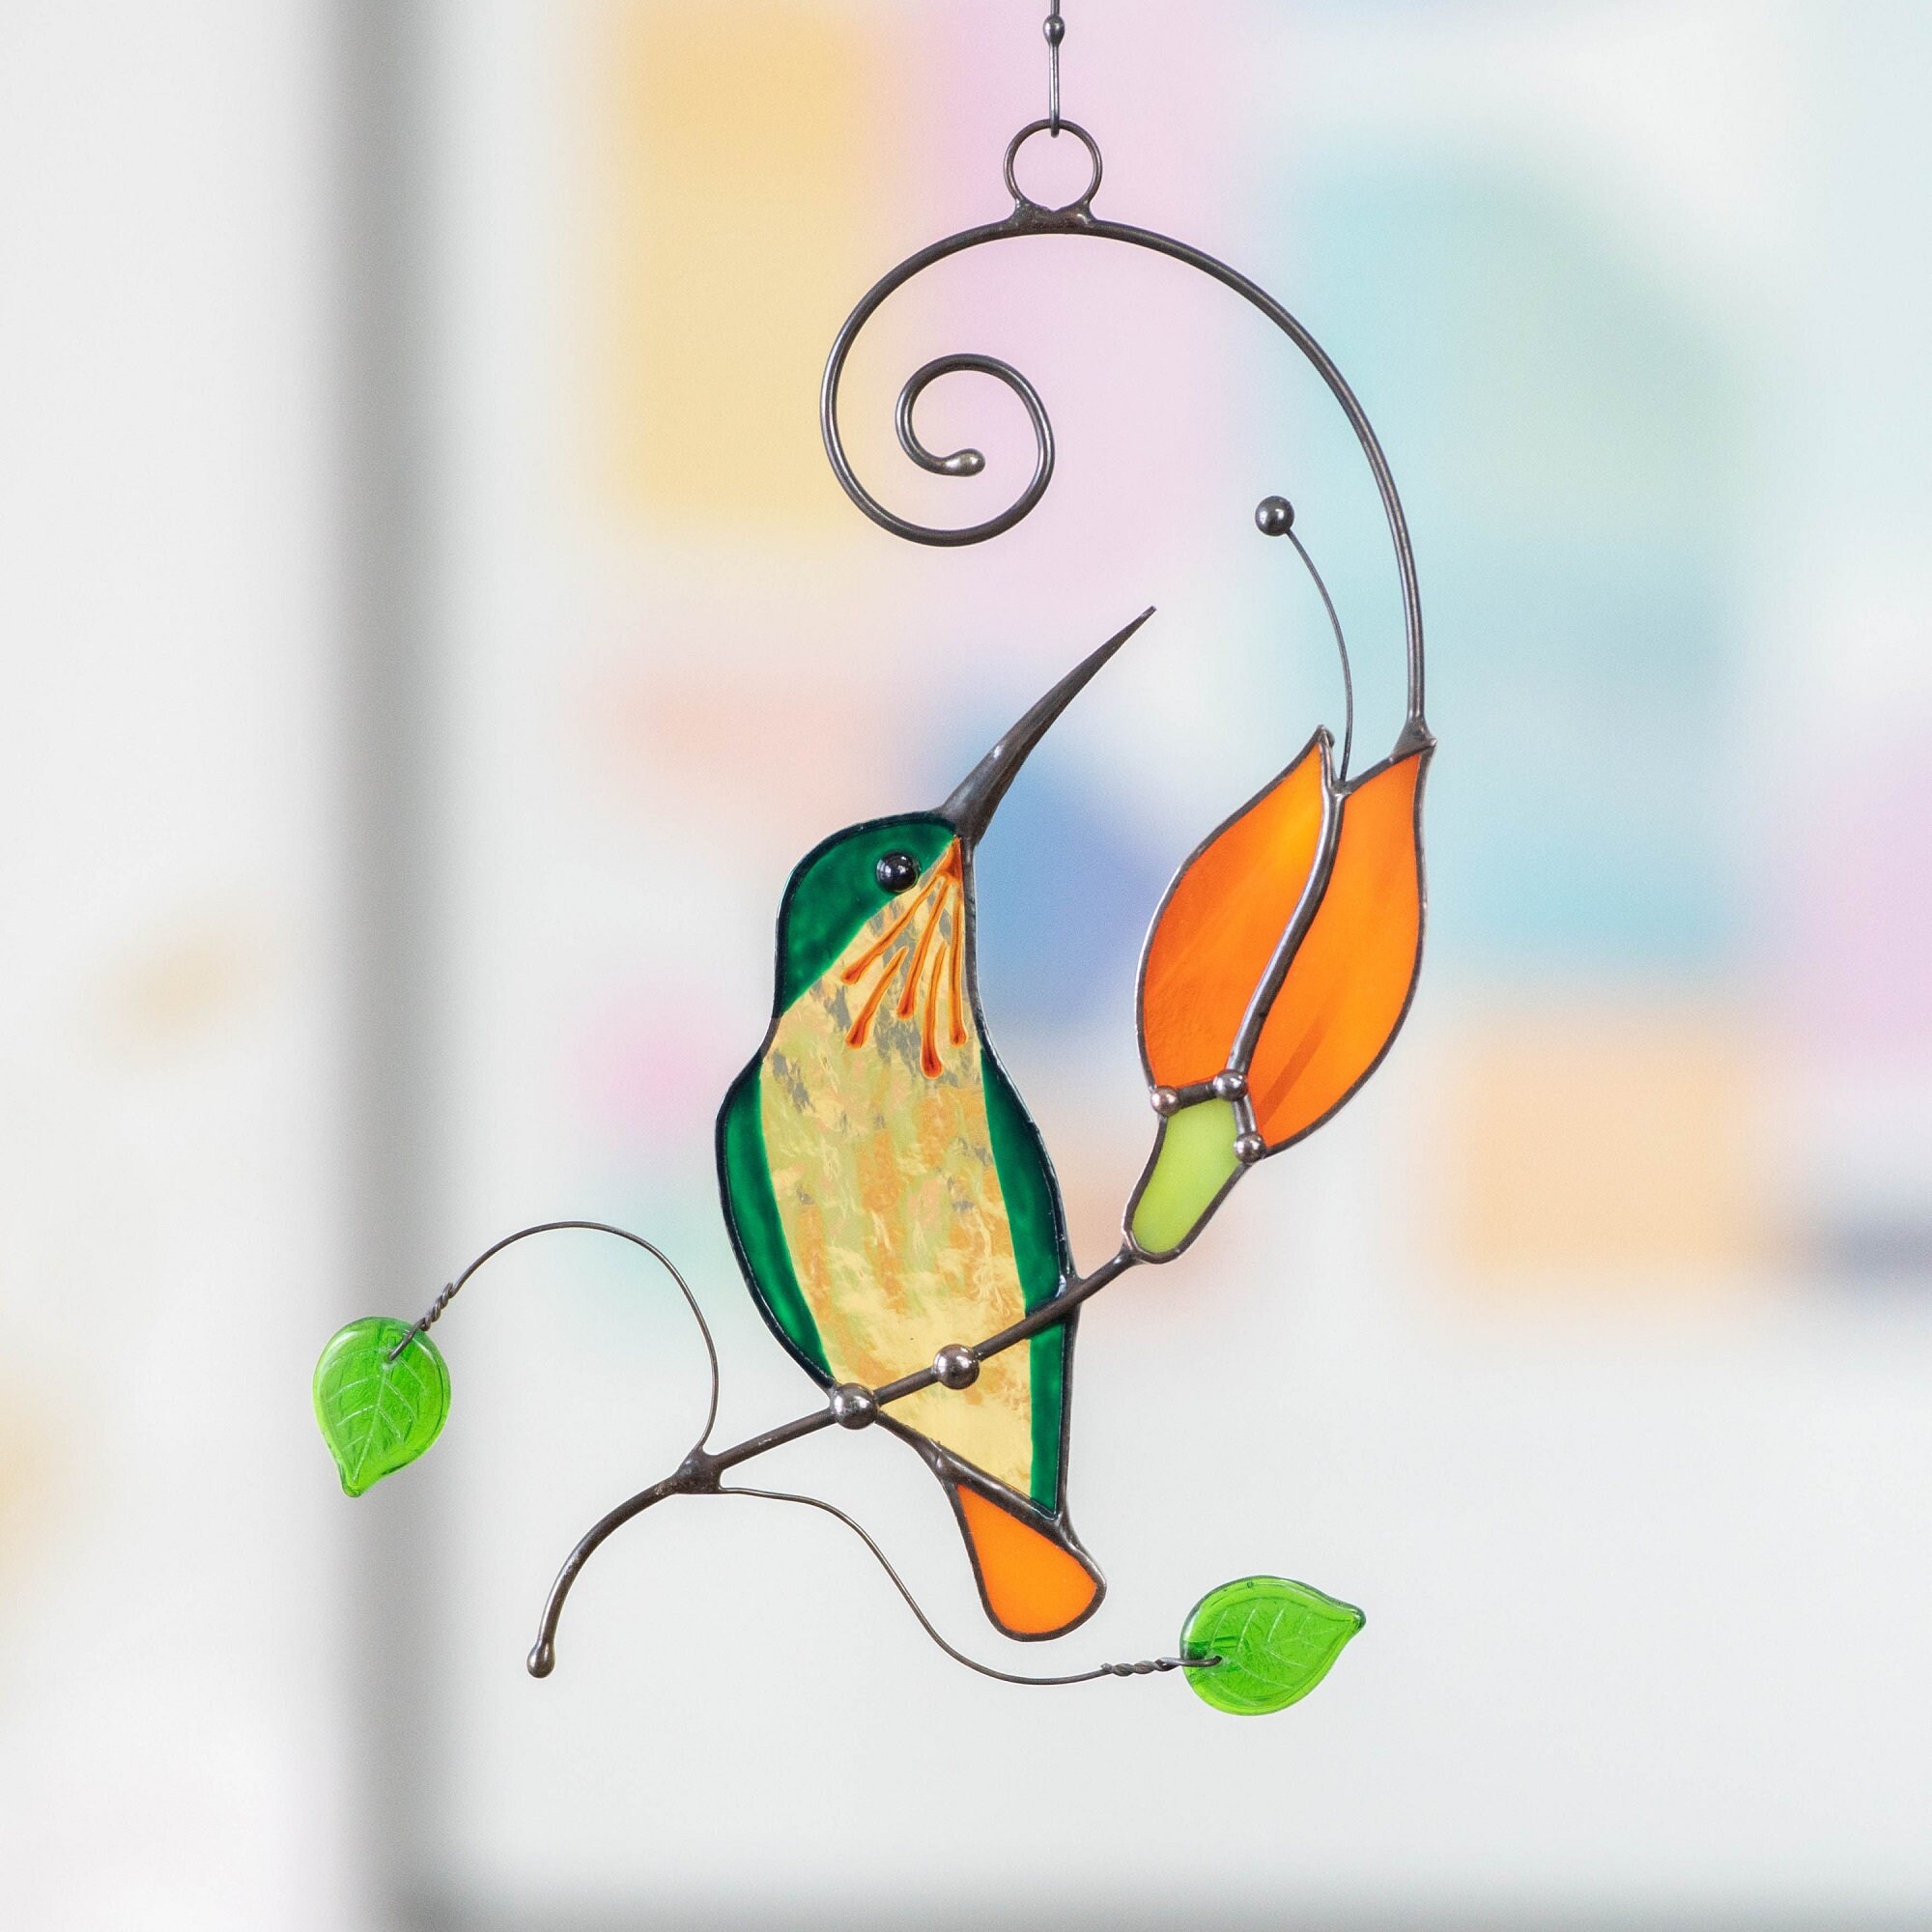 Handheld Hummingbird Feeders & Sun catcher/car charm/decoration or ornament 